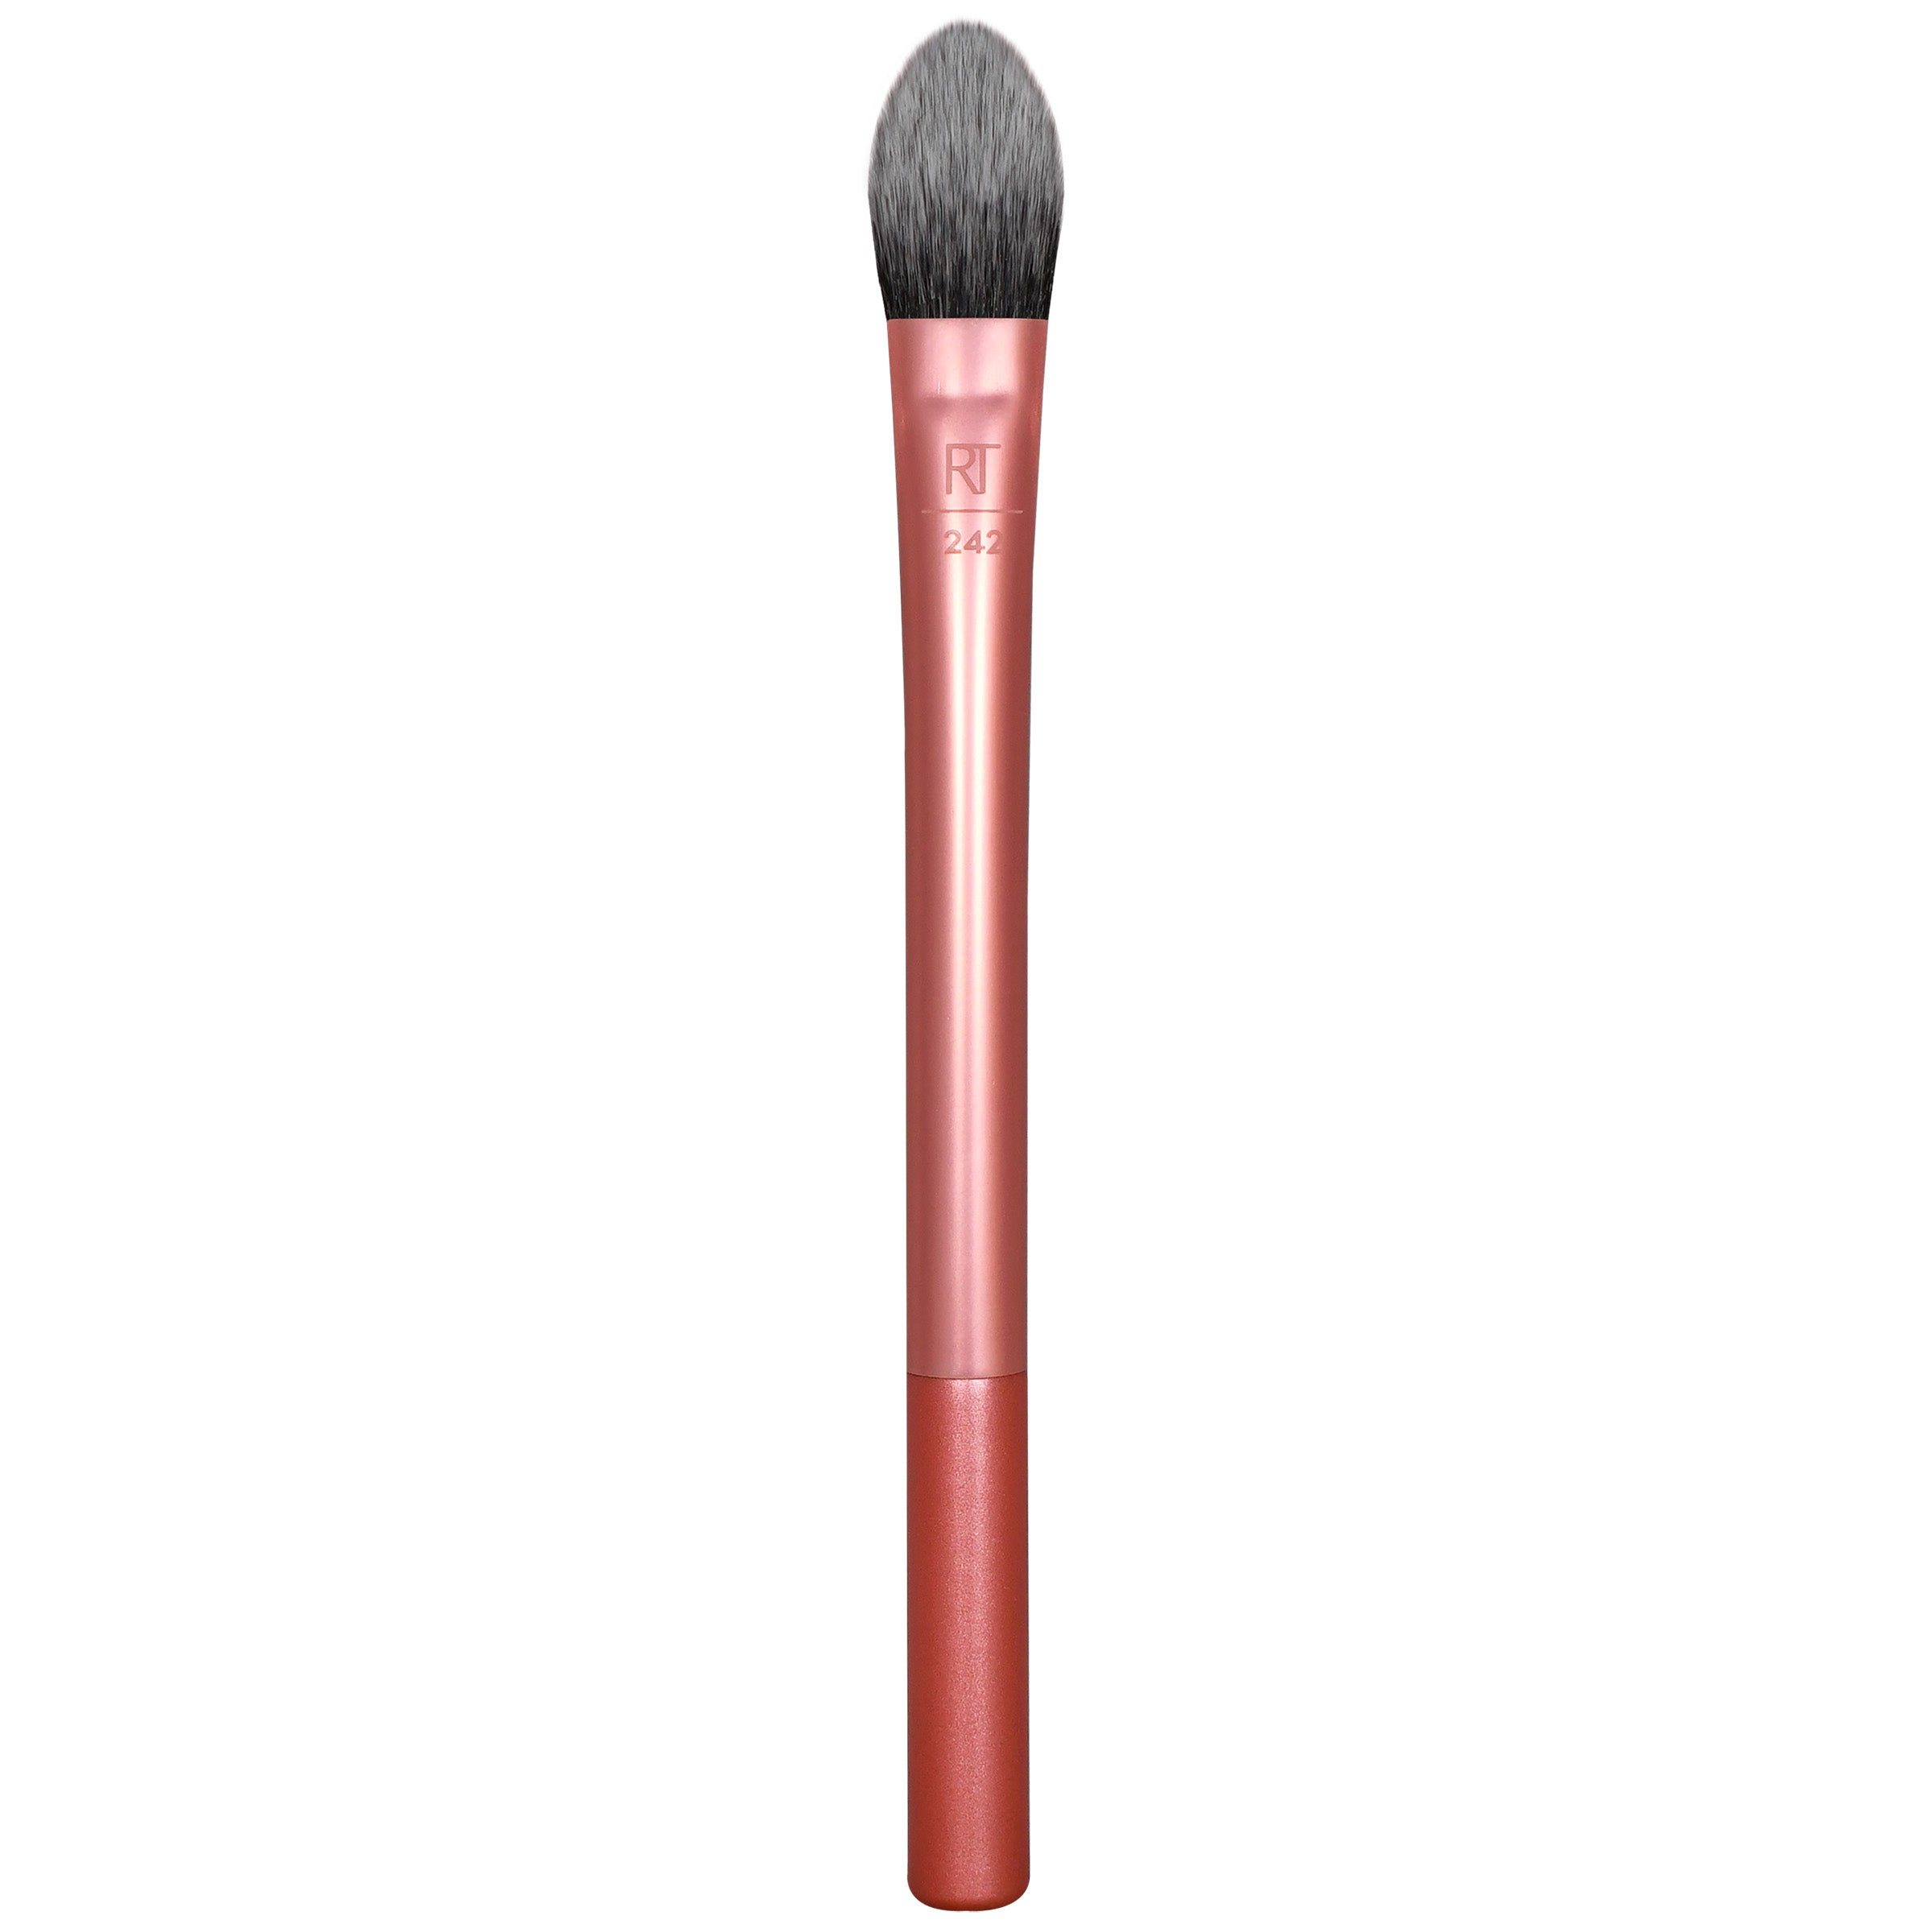 Brightening Concealer Makeup Brush - MazenOnline